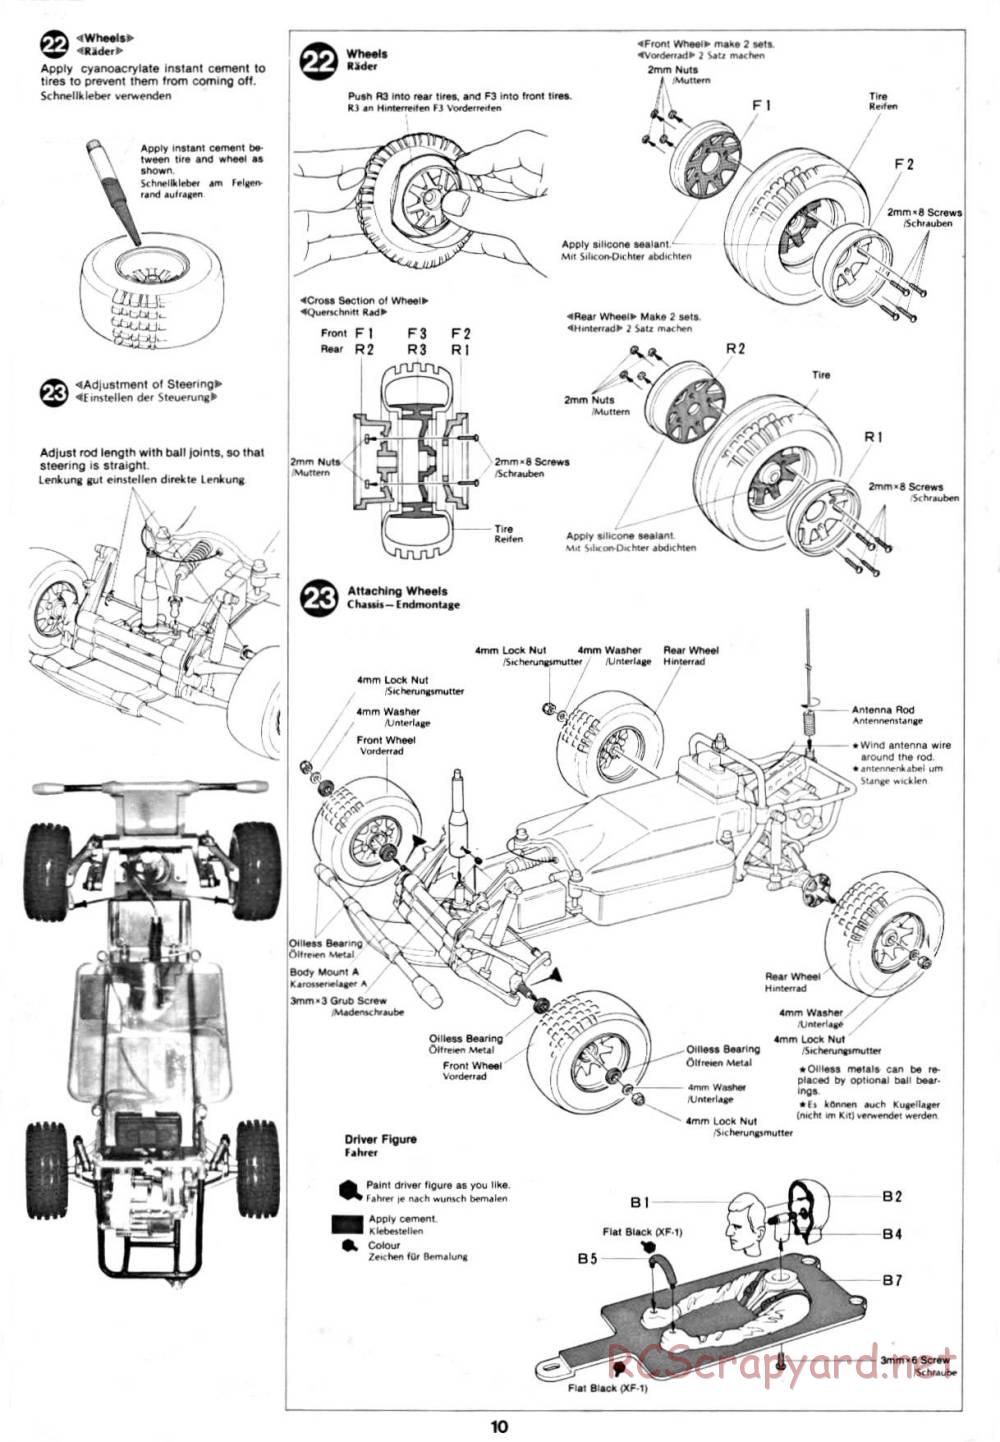 Tamiya - Ford F-150 Ranger XLT - 58027 - Manual - Page 10